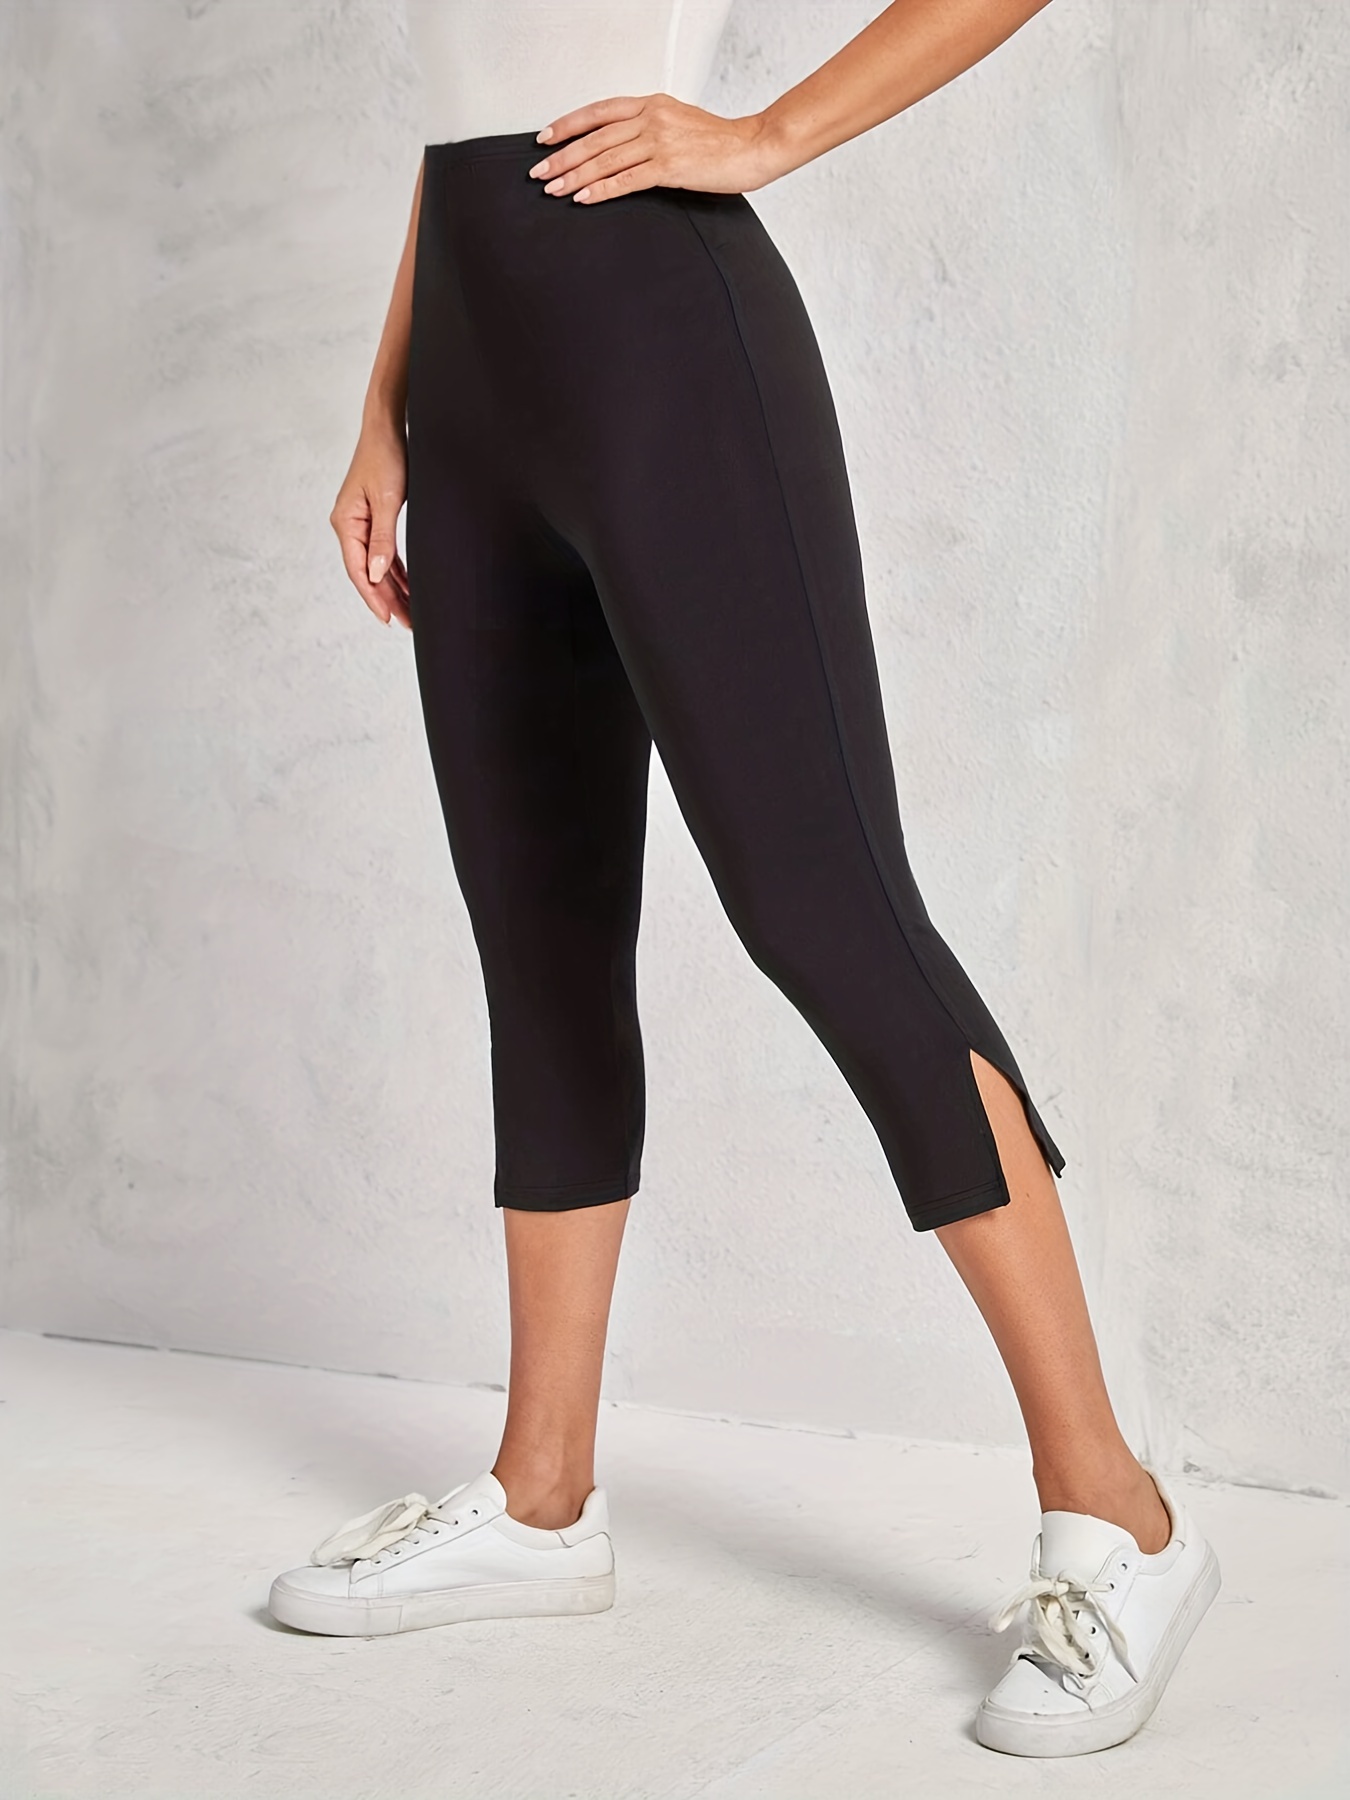 Plus Size Capri Leggings for Women Yoga Bottom Capris Pants High Waisted  Cutout Hem Solid Color Compression Shorts (Medium, Black)